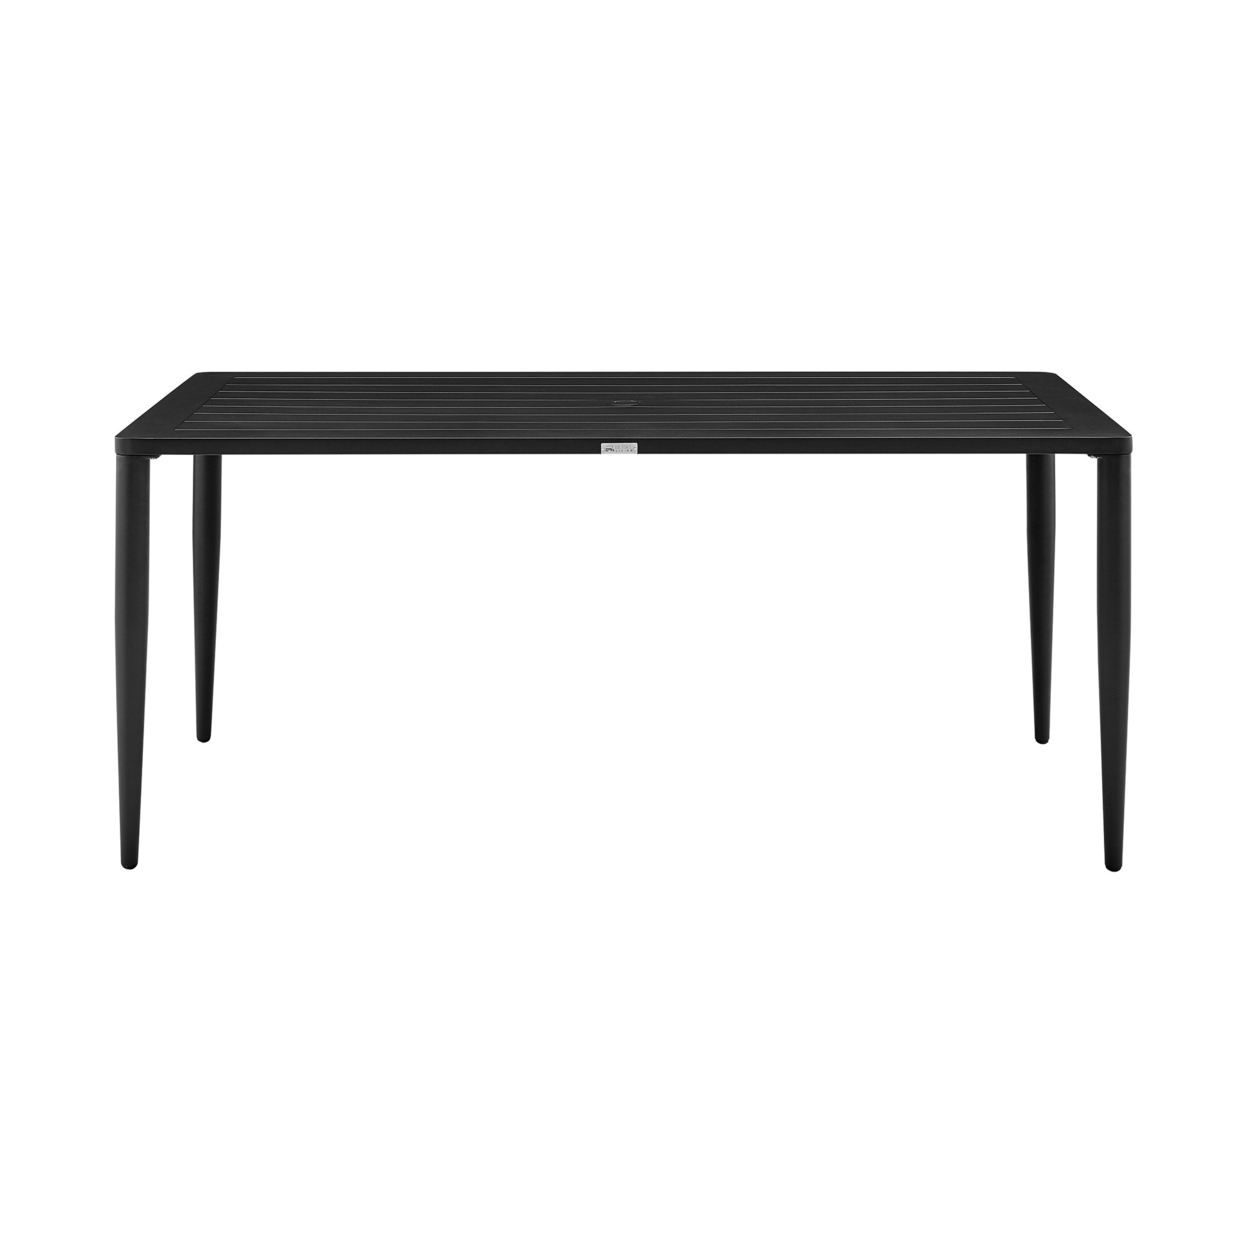 Zoe 71 Inch Patio Dining Table, Aluminum Frame, Rectangular Tabletop, Black- Saltoro Sherpi